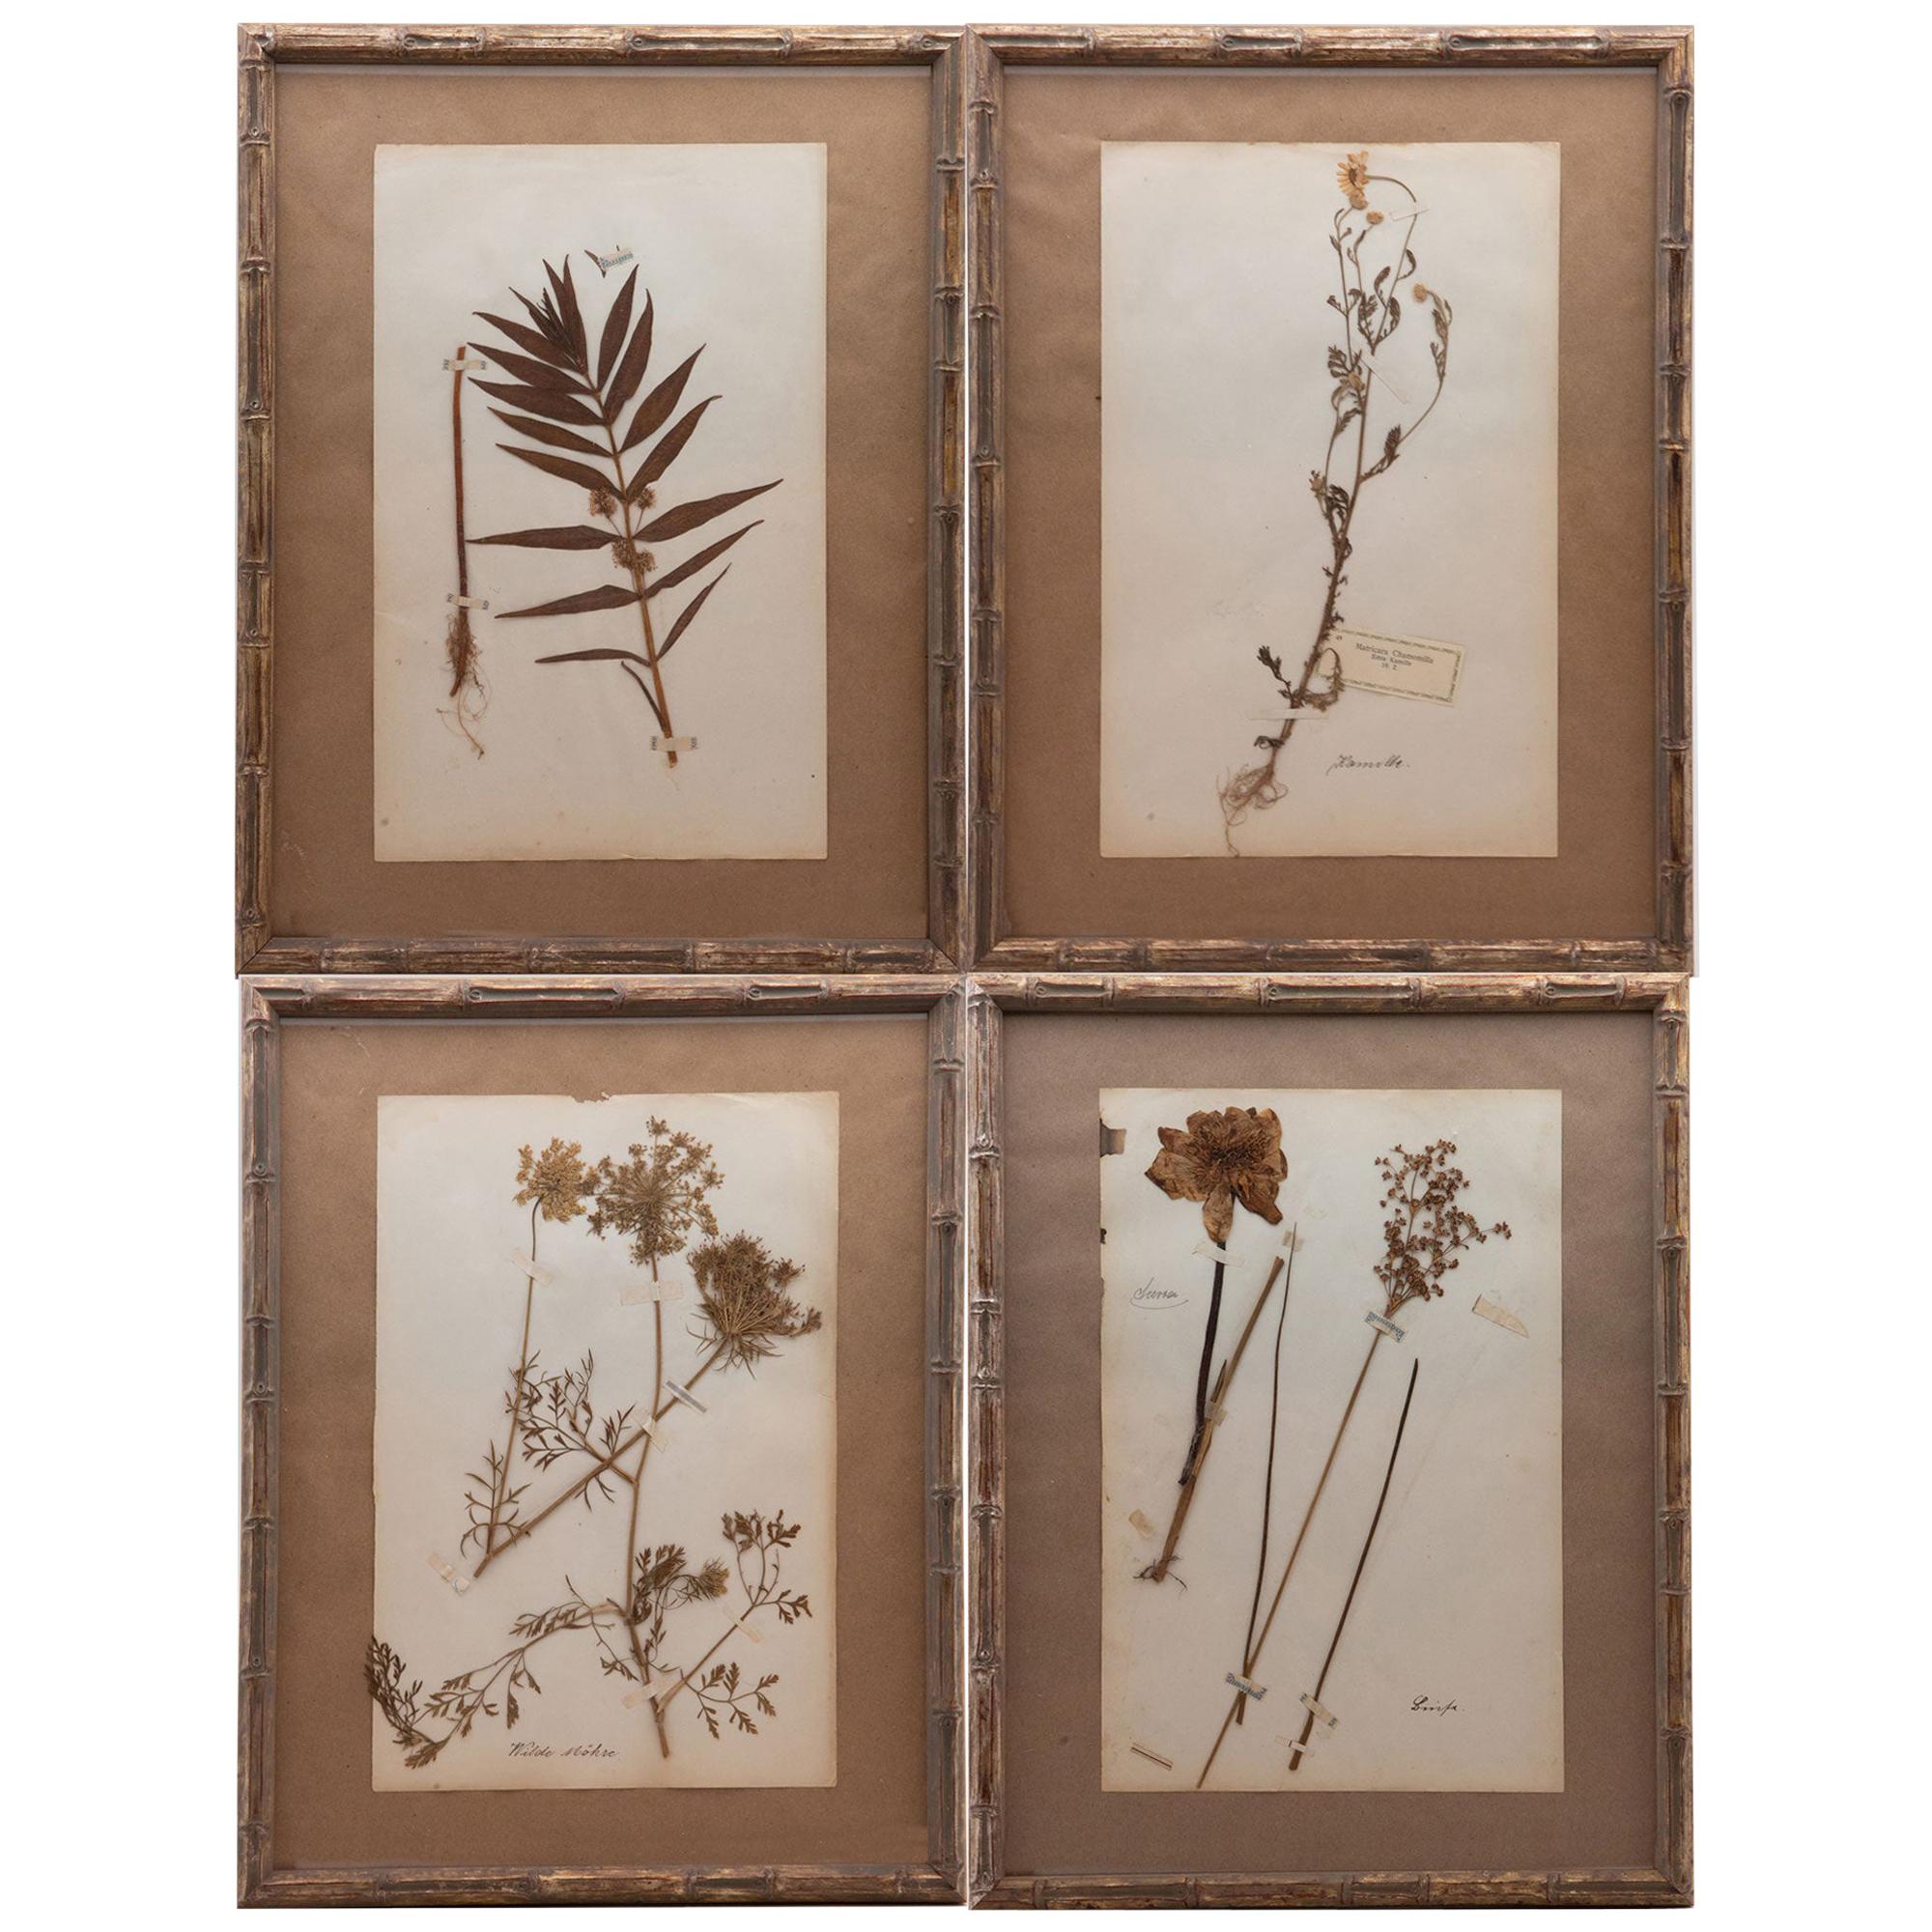 Framed and Pressed French 'Herbier' "Pressed Plant" Specimens